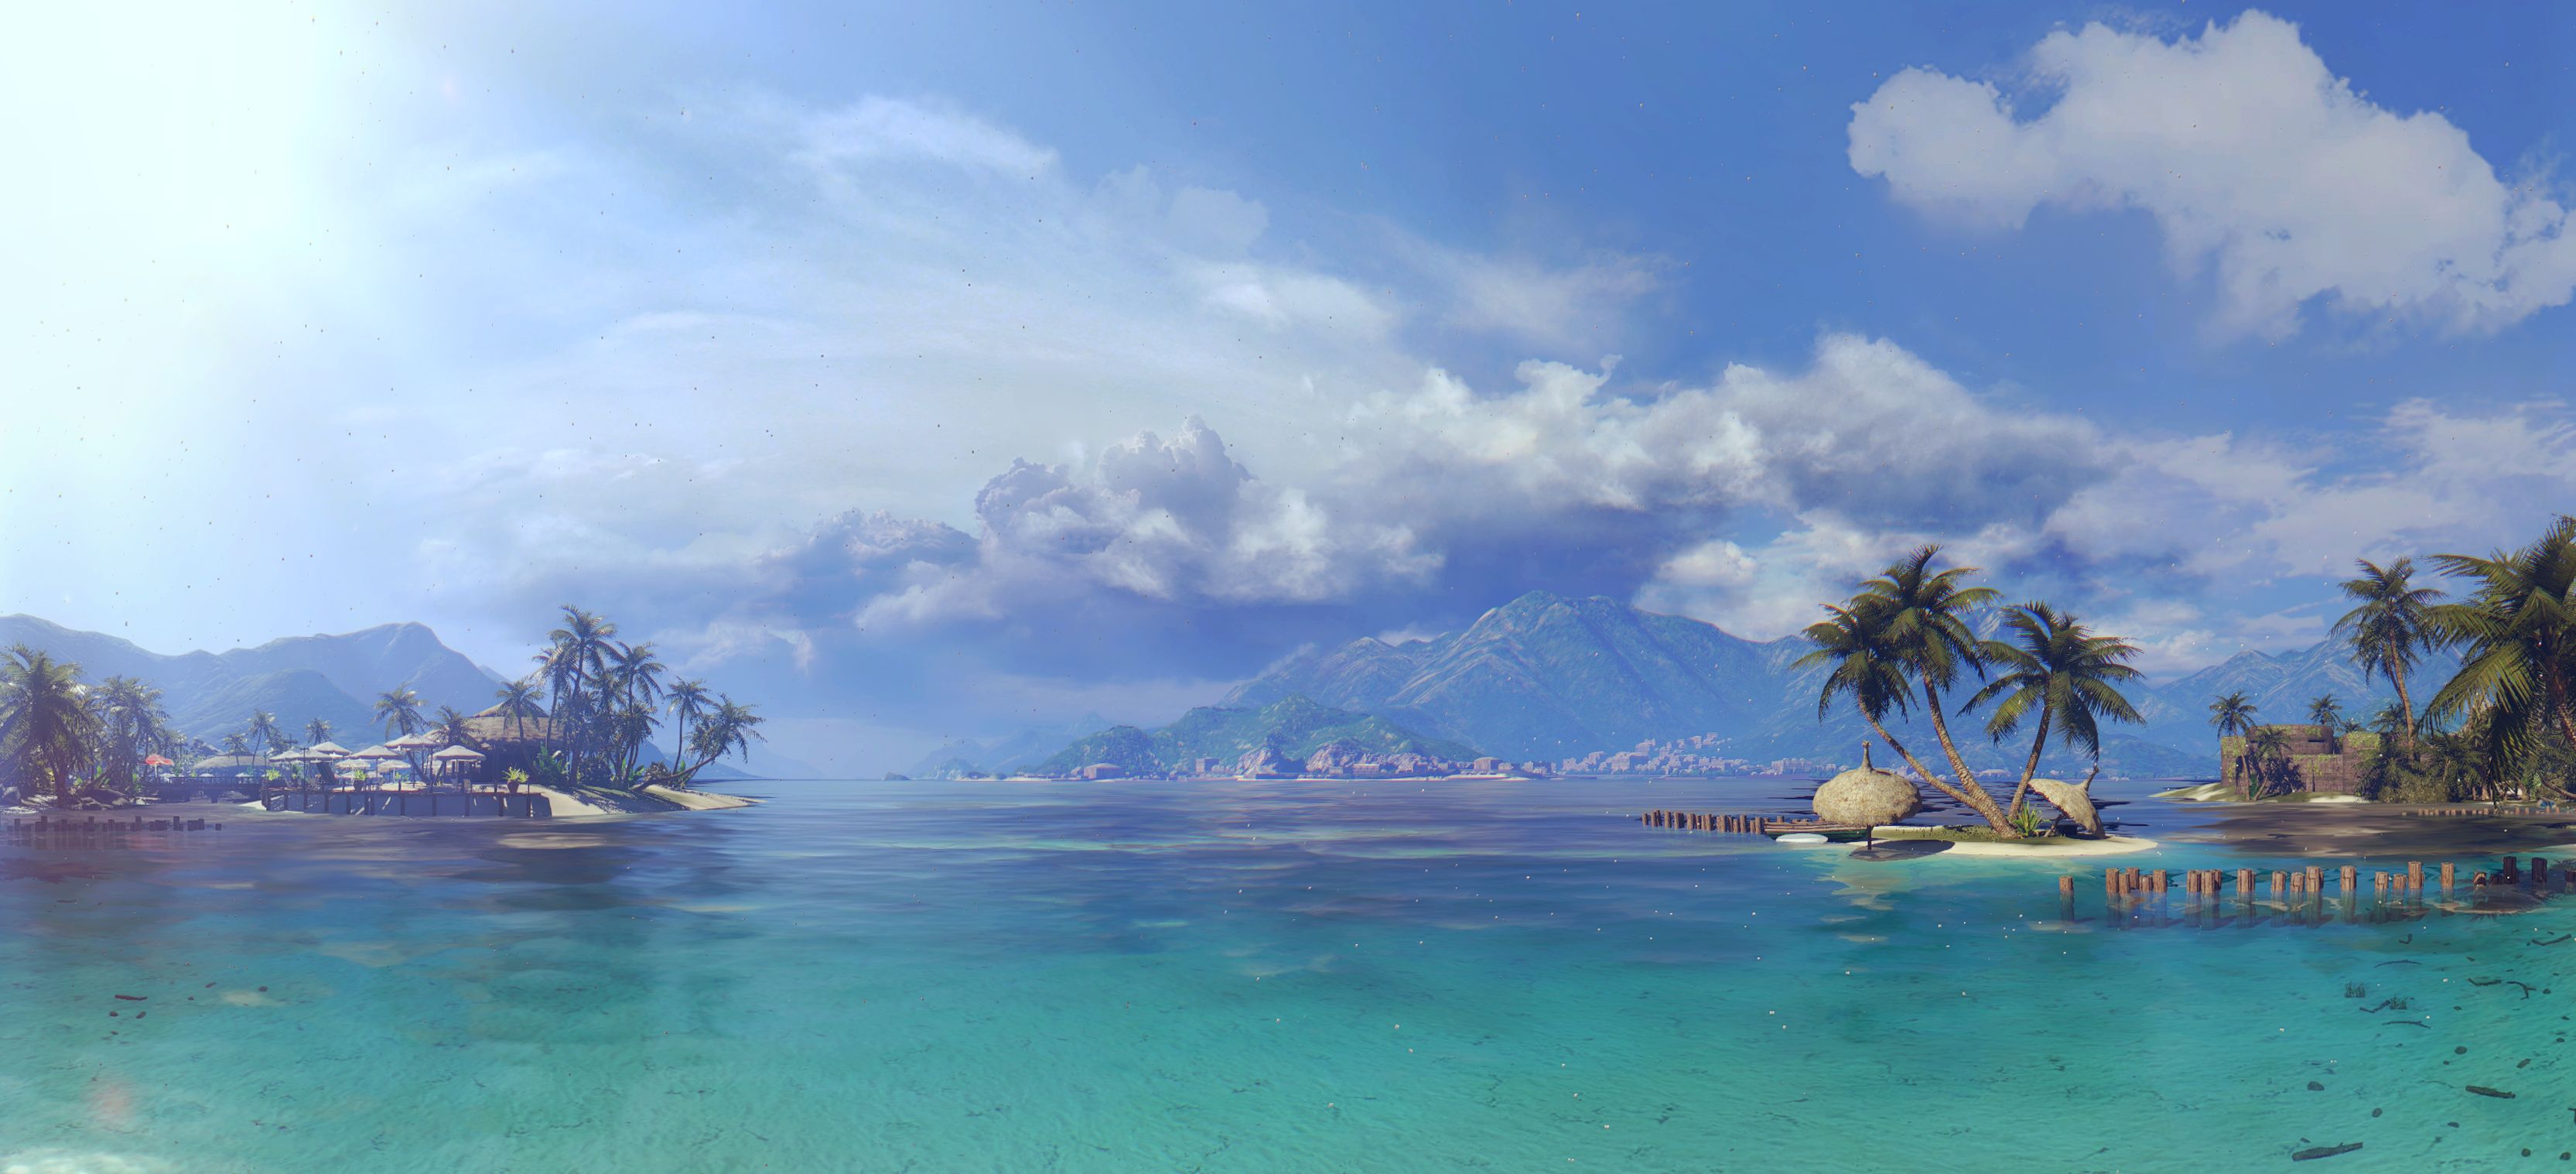 Descarga gratuita de fondo de pantalla para móvil de Videojuego, Dead Island.